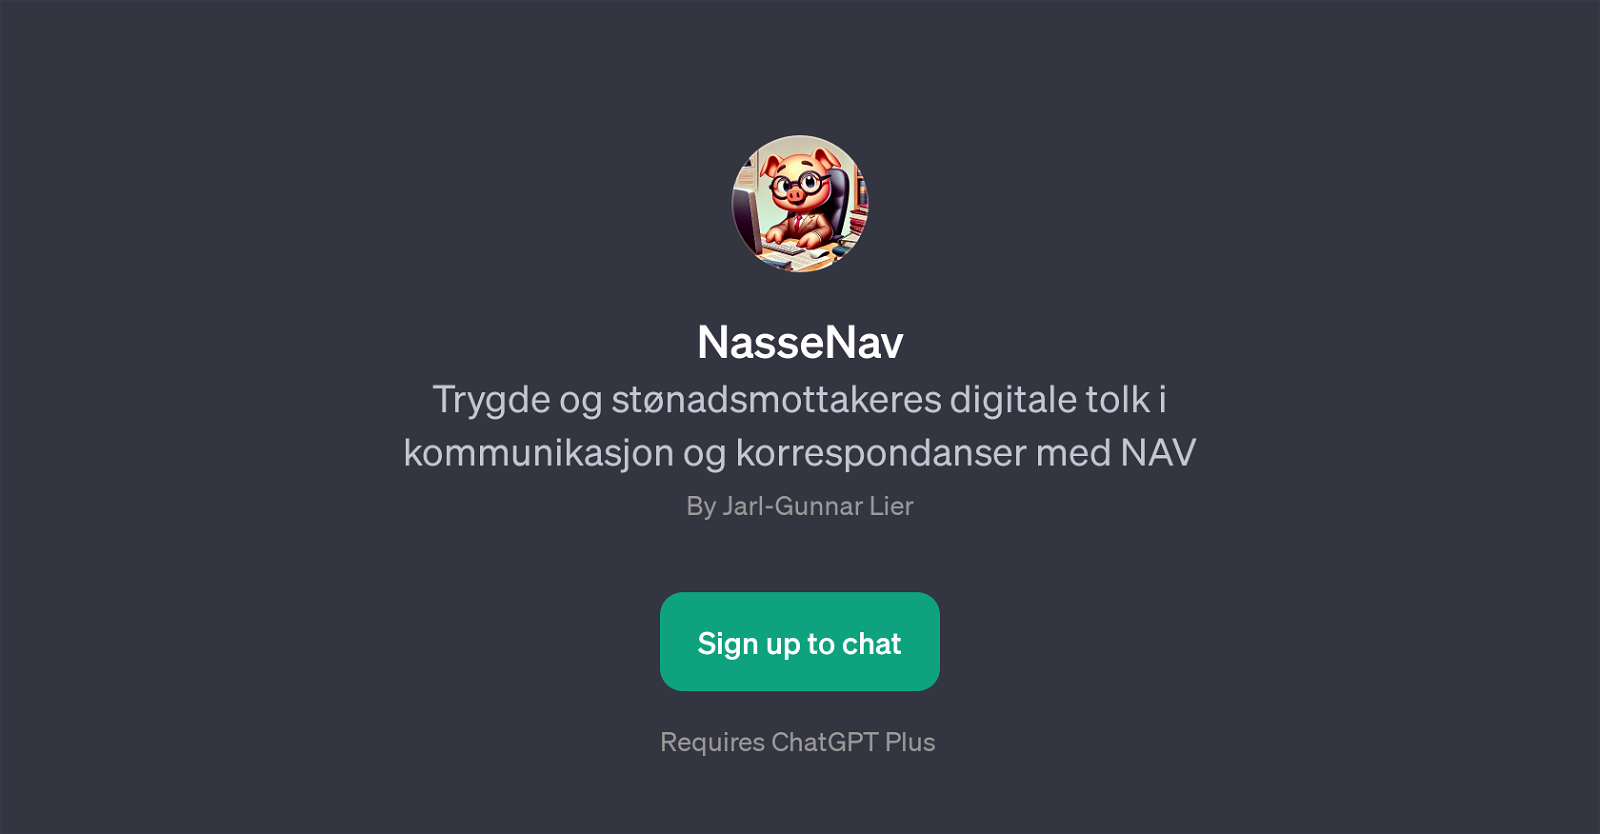 NasseNav website